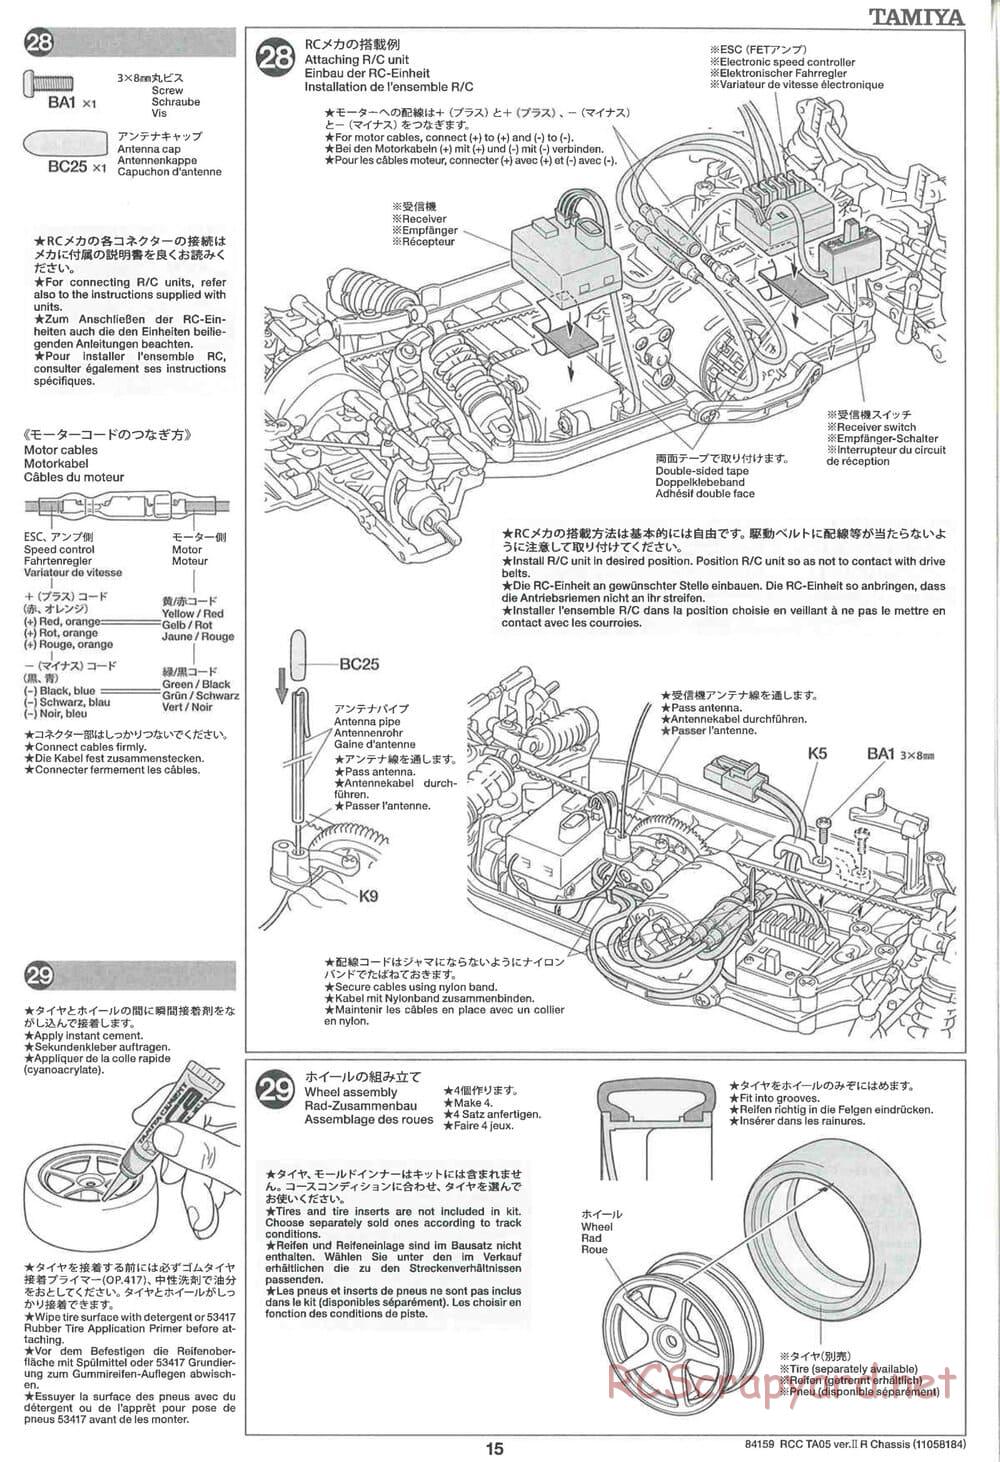 Tamiya - TA05 Ver.II R Chassis - Manual - Page 15